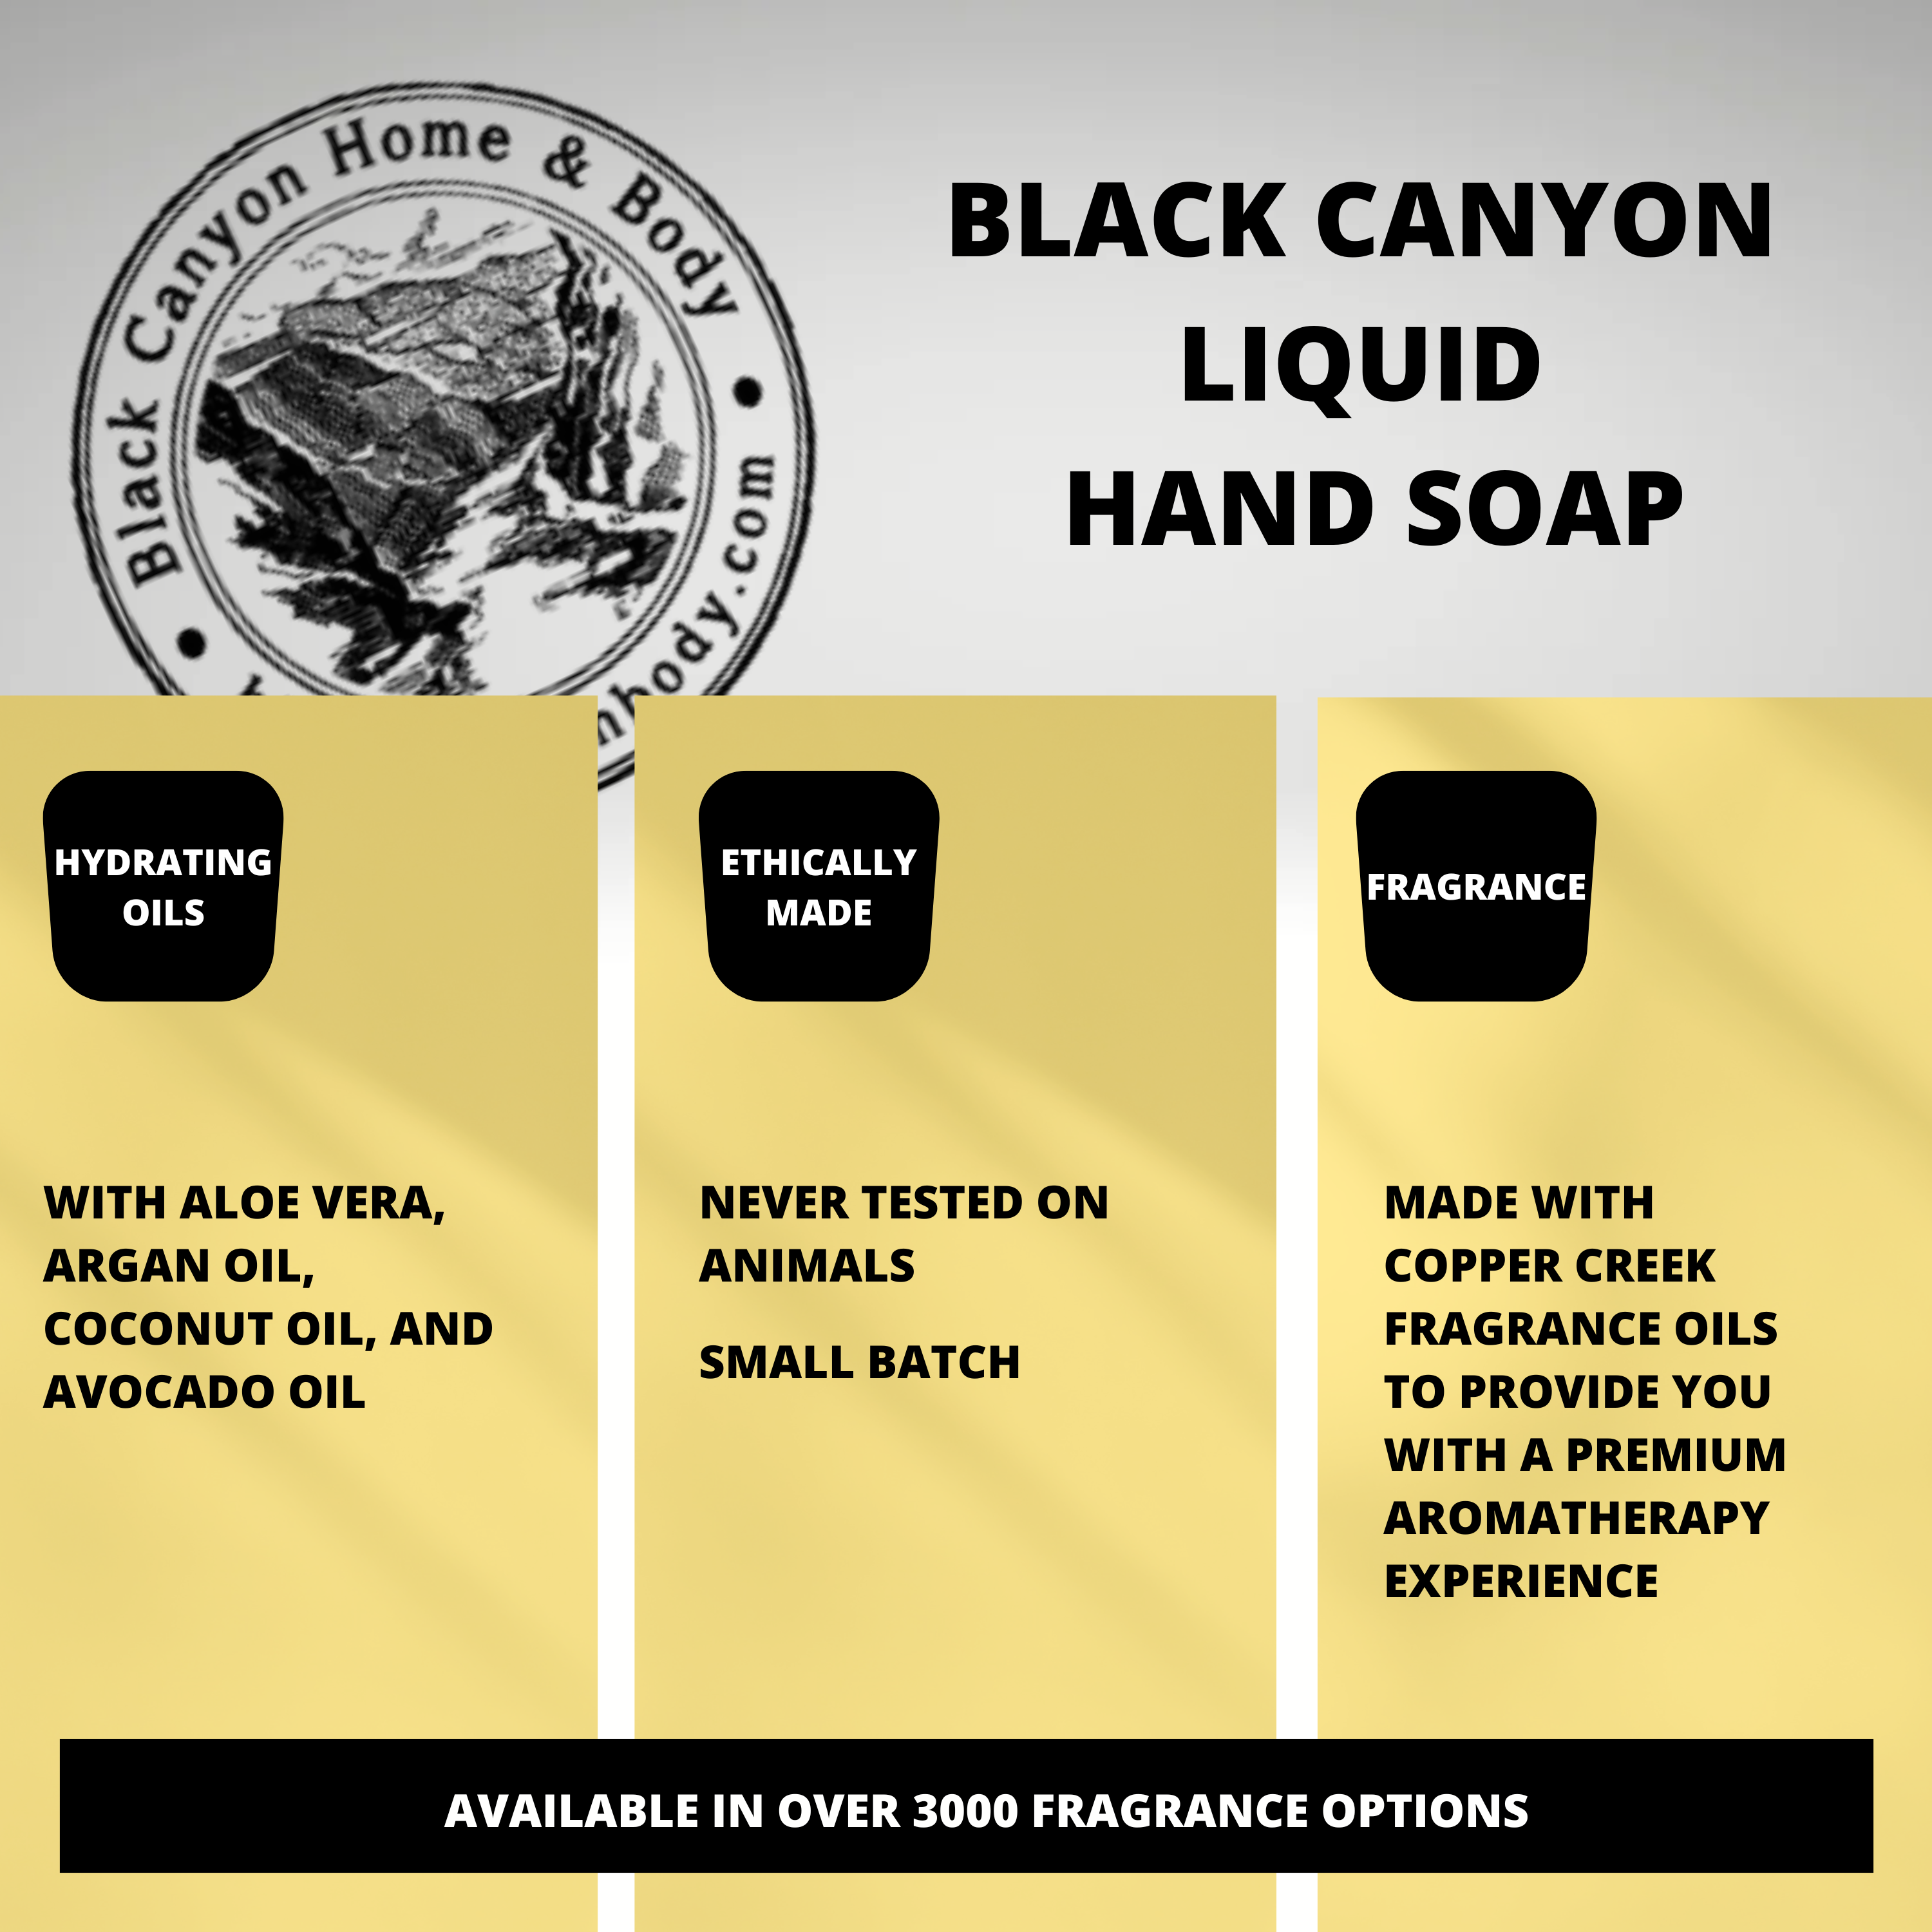 Black Canyon Currant & Honey Scented Liquid Hand Soap